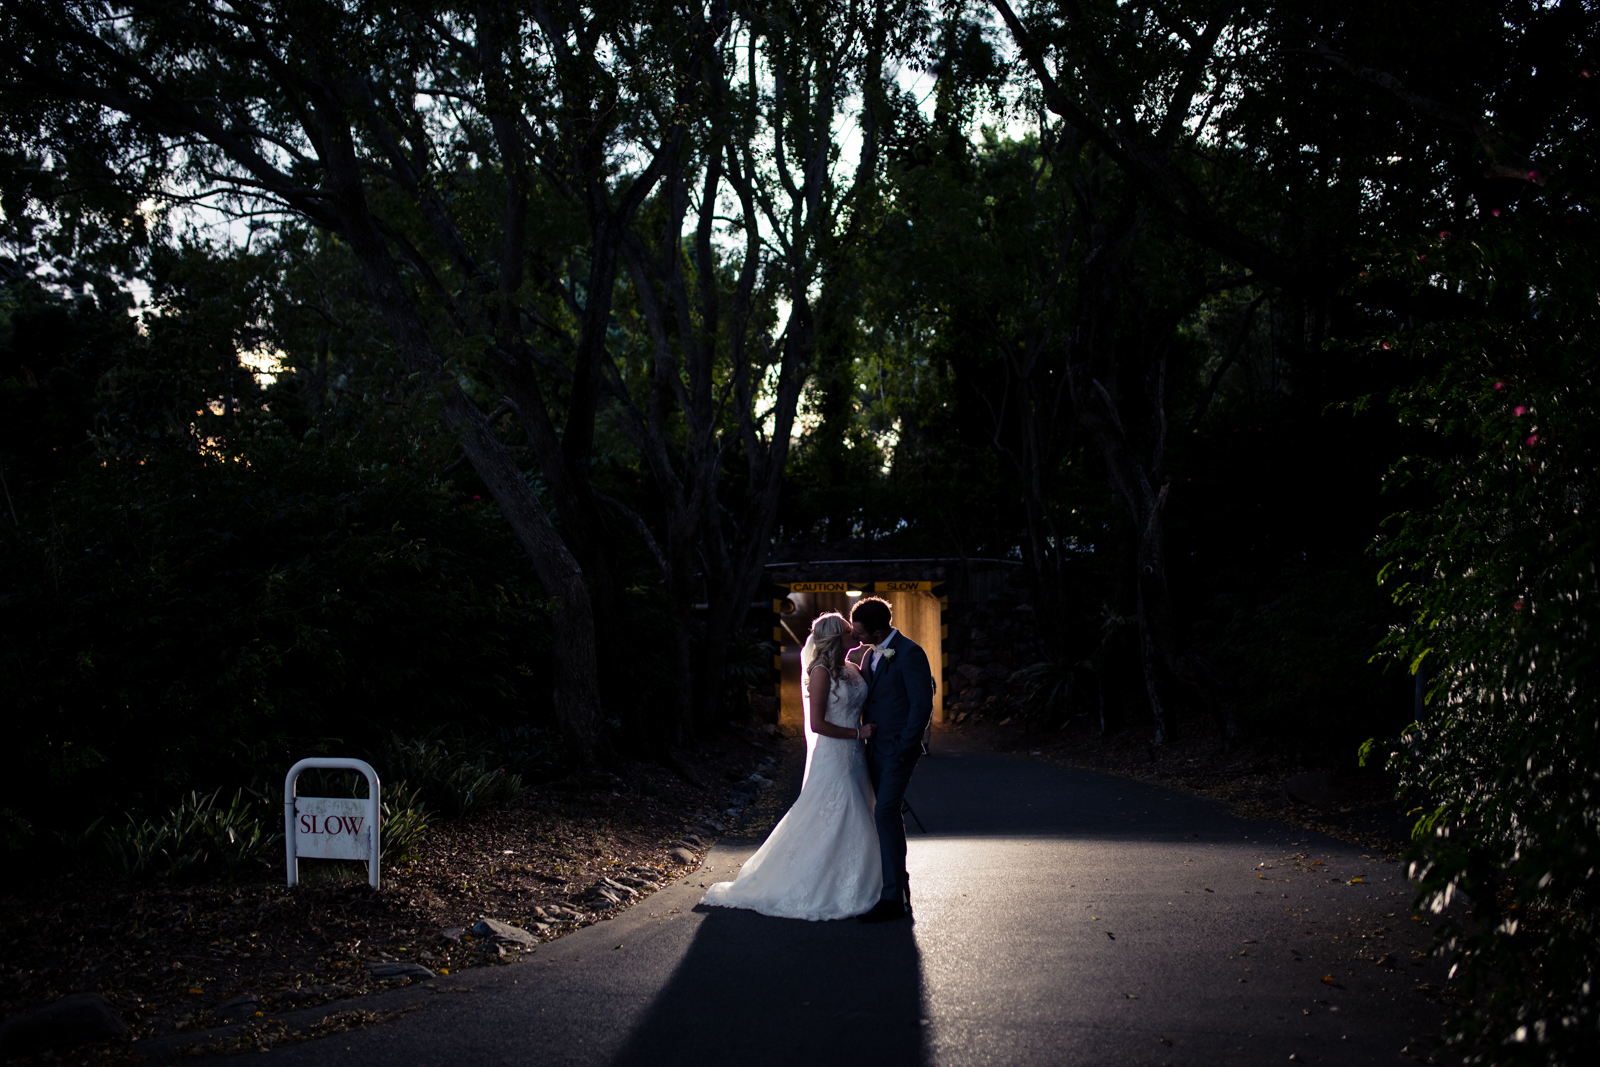 A silhouette image taken by J'adore weddings